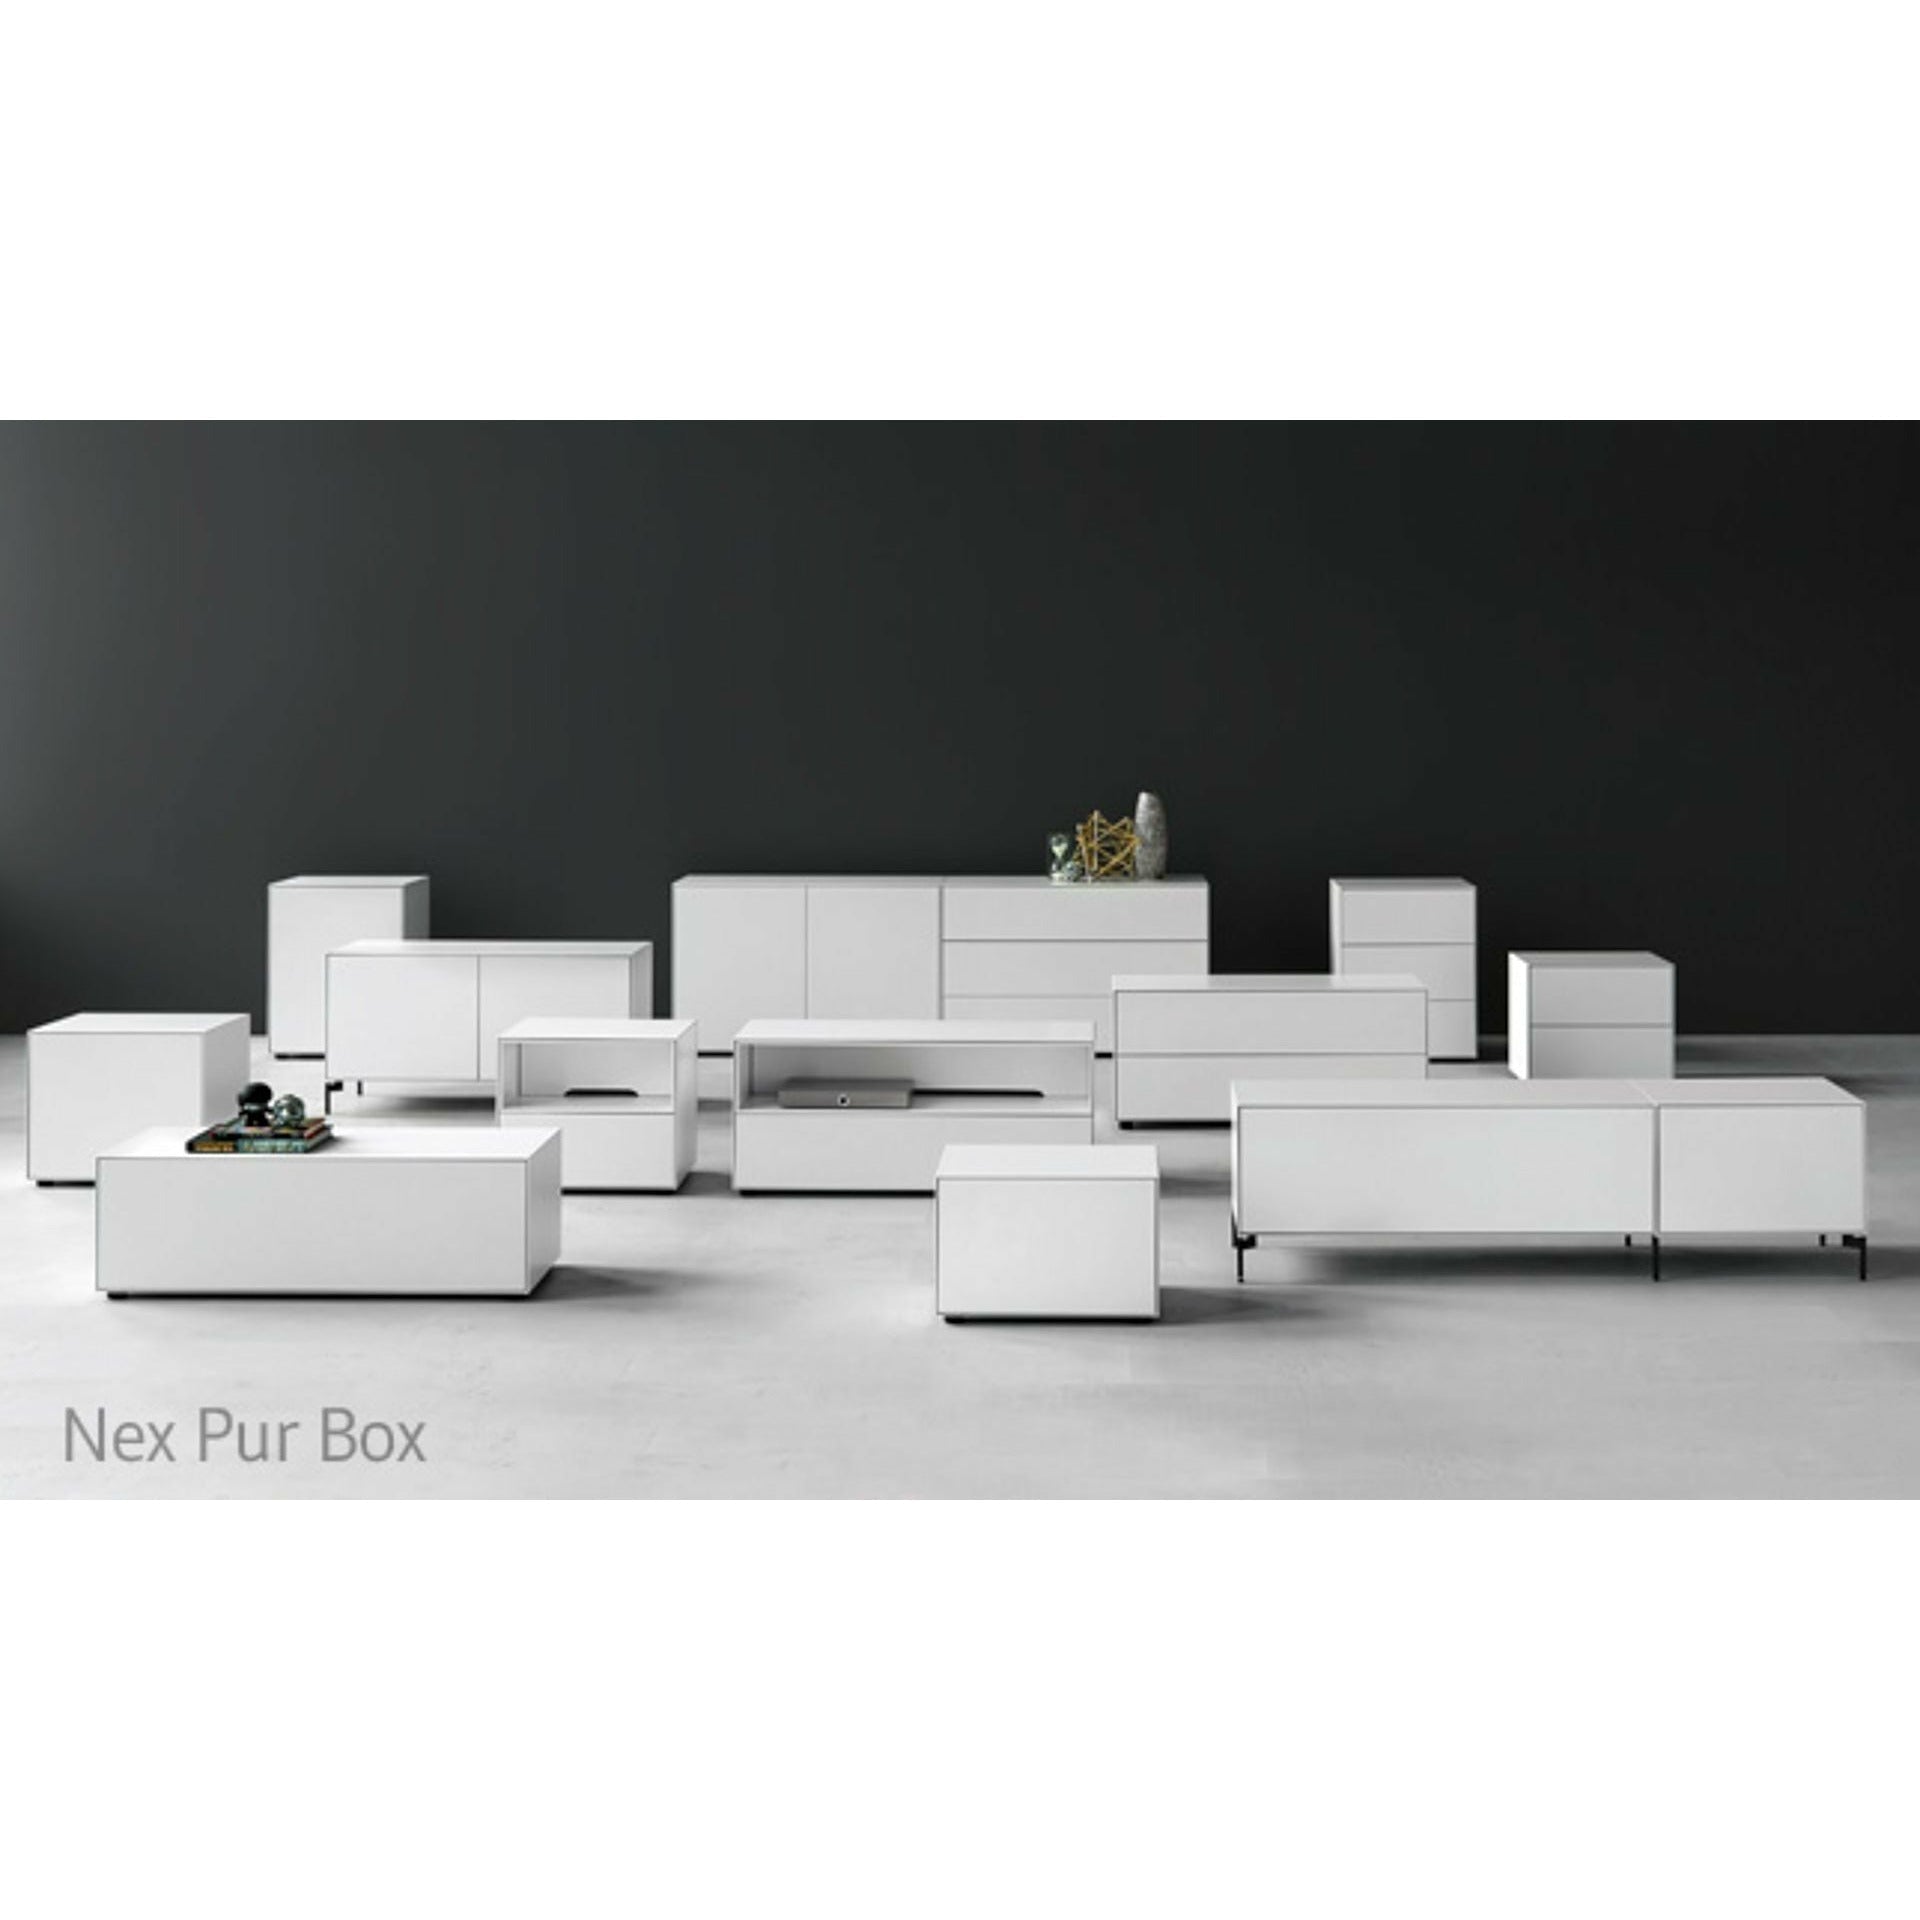 Piure NEX PUR BOX MEDIA FLAP HX W 37,5x180 cm, 1 étagère